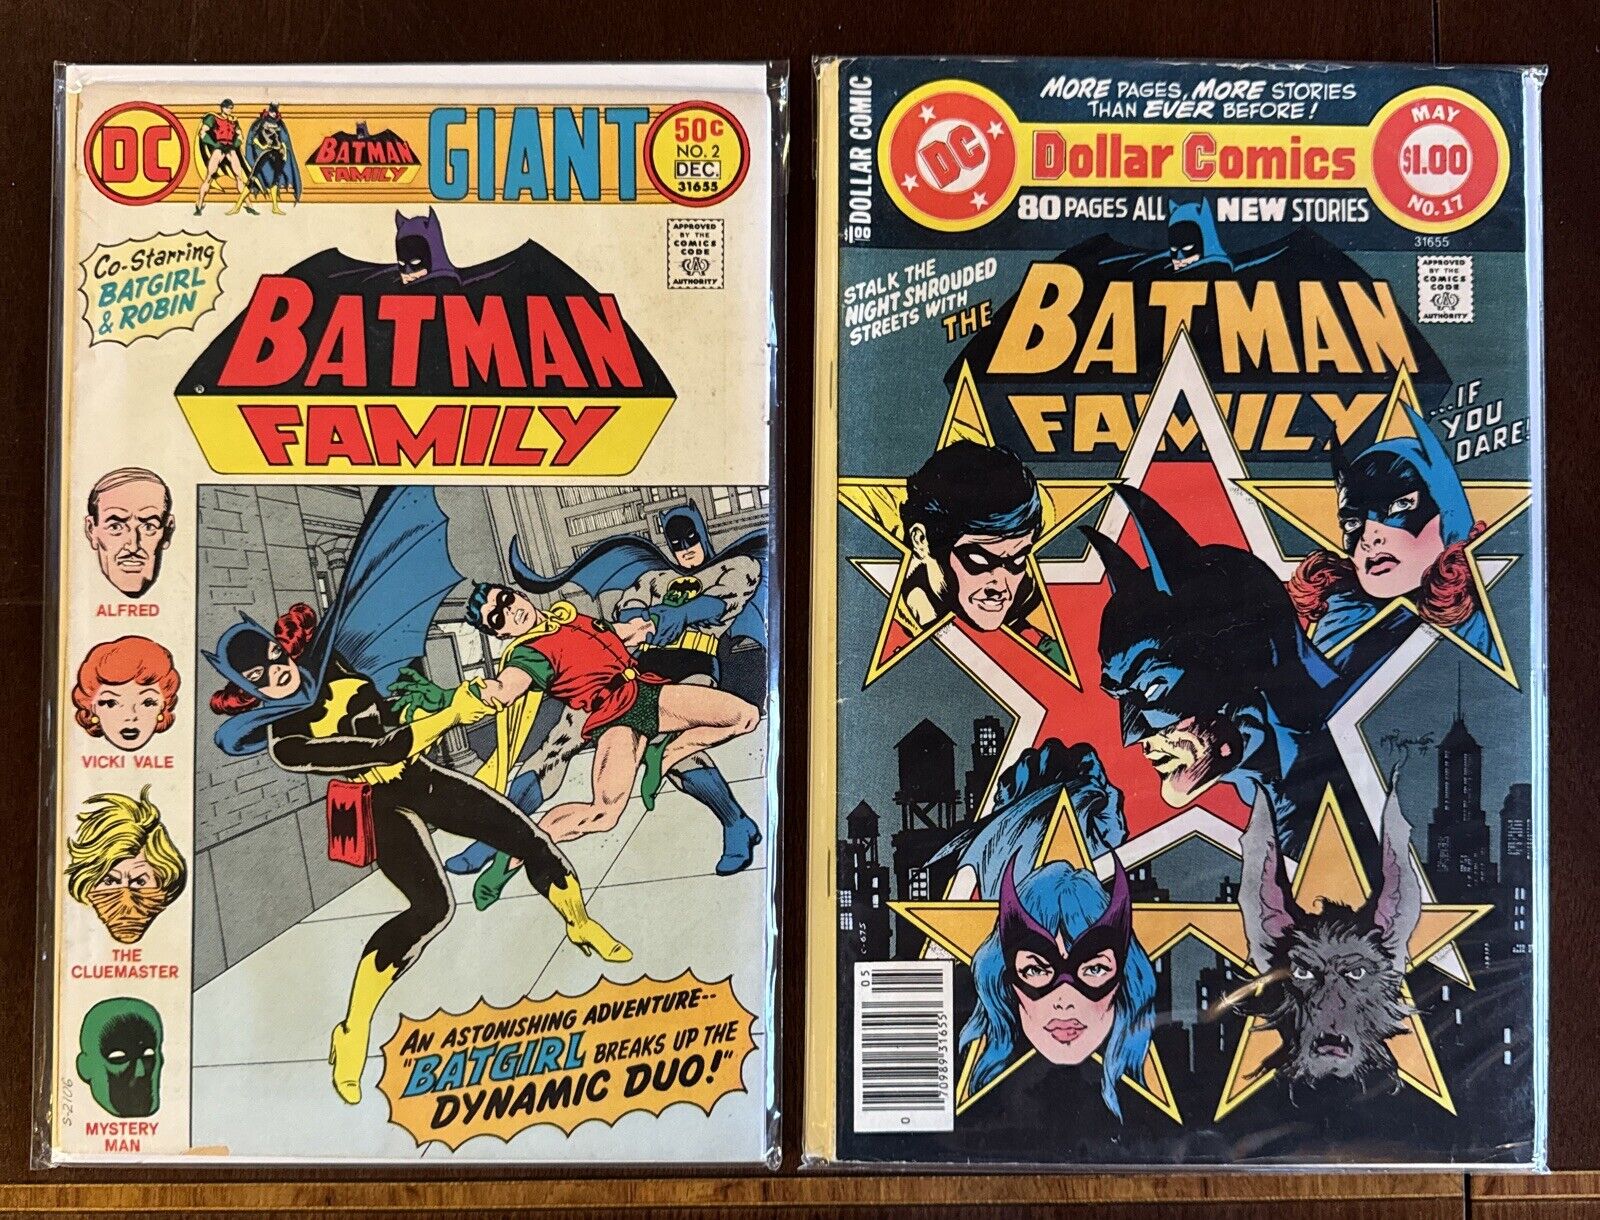 Batman Family #2 & #17 DC Comics, 1975 - 78 - See Description for Condition